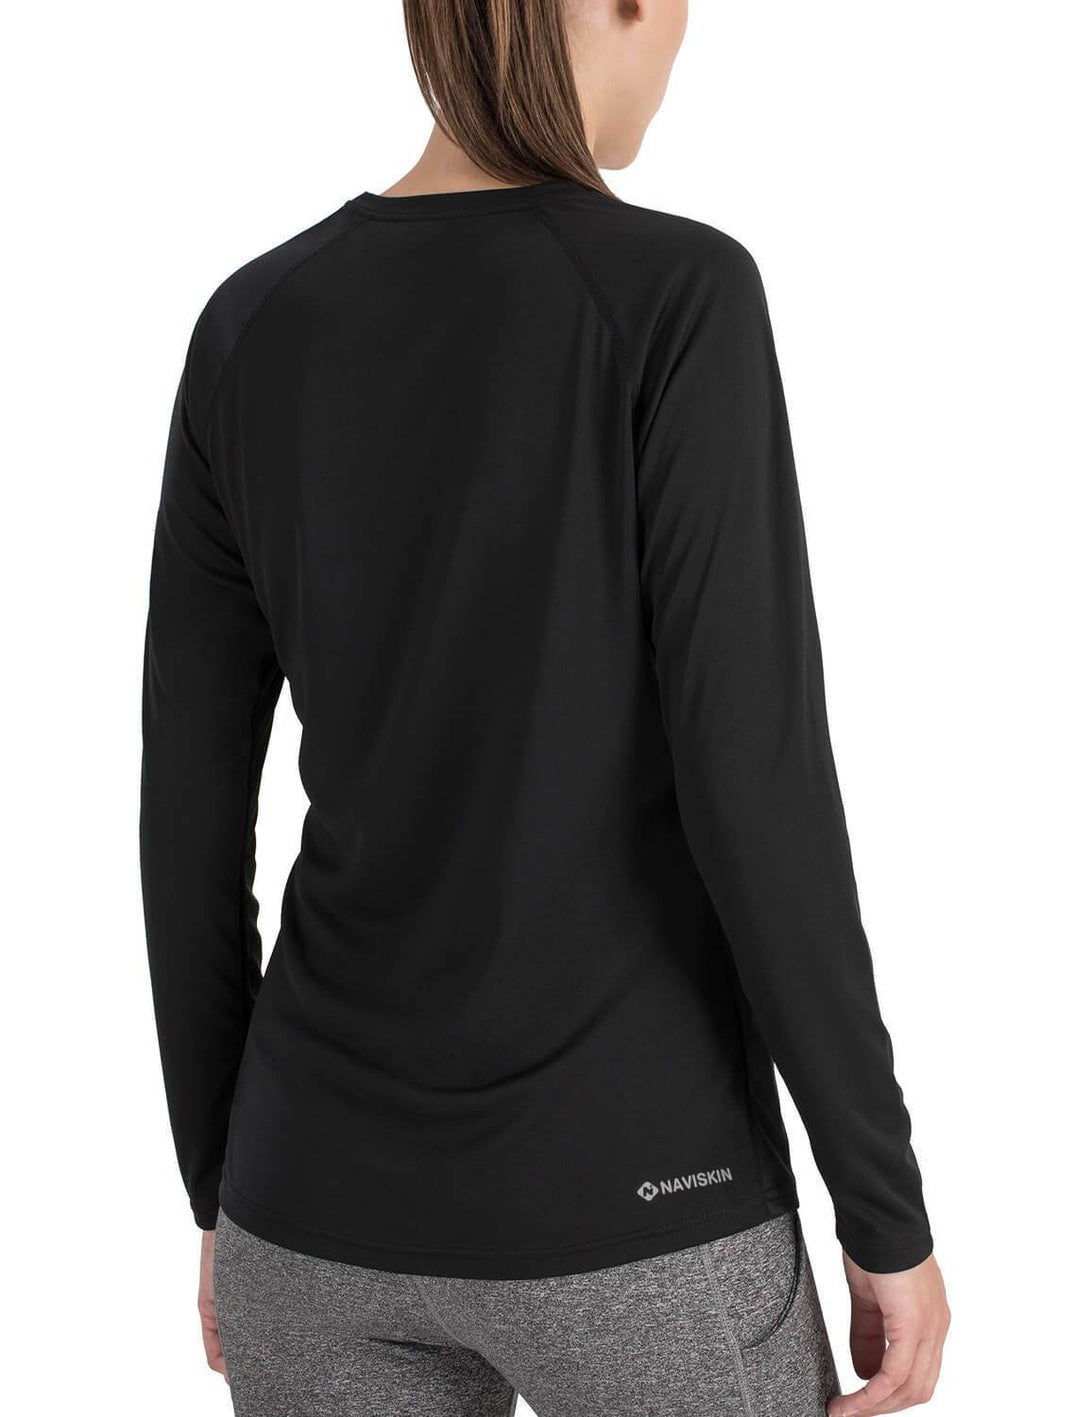  Womens Running Shirts Long Sleeve Workout Shirts Quick Dry  UPF50+ Sun Shirts Lightweight Watch Window Workout Tops Gray L